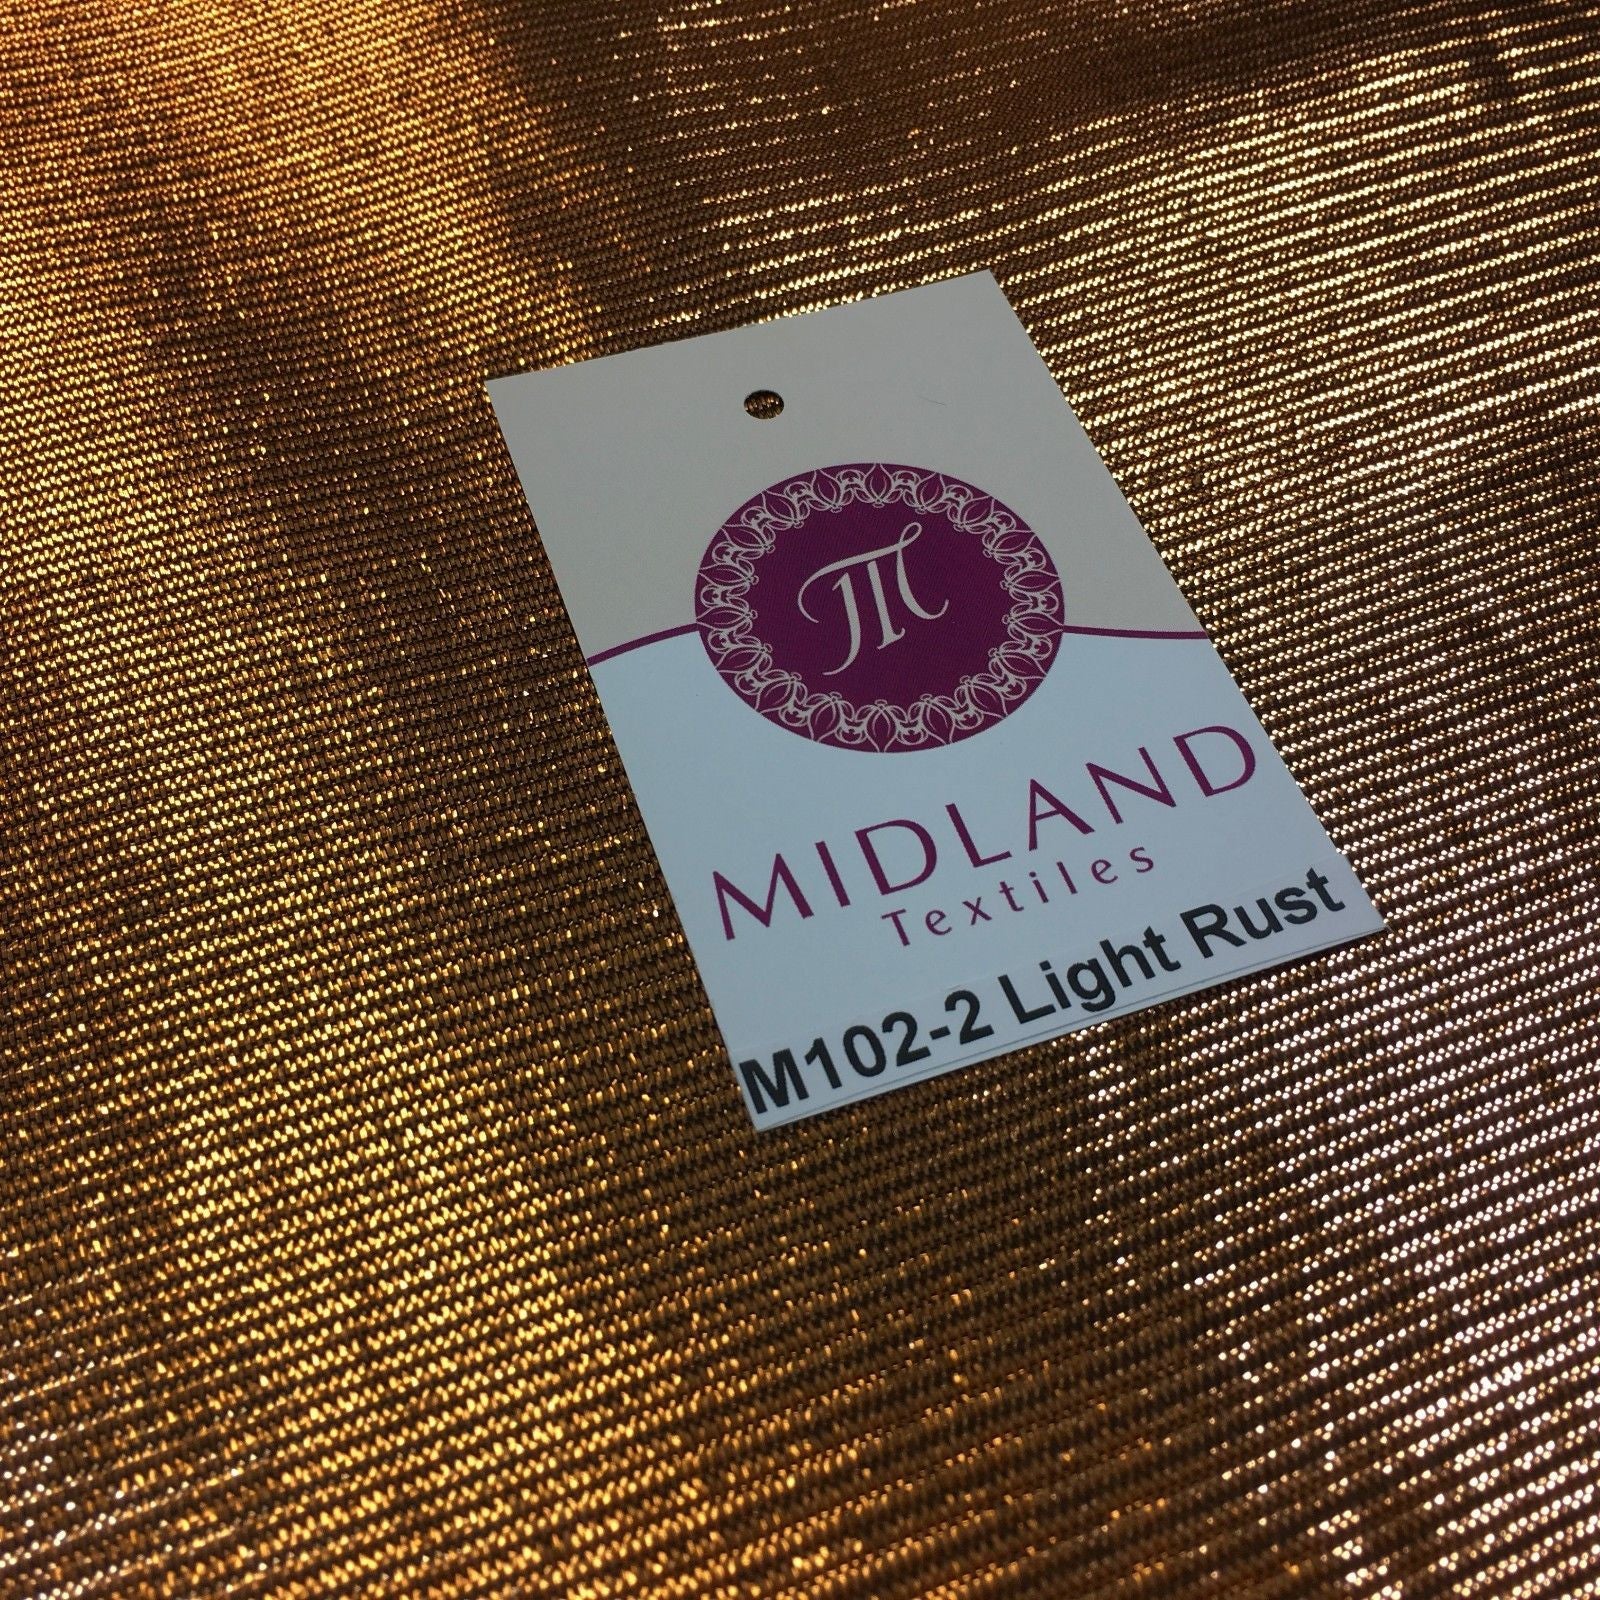 Metallic Textured Foil Lame Dress Craft Fabric 58" wide M102 Mtex - Midland Textiles & Fabric